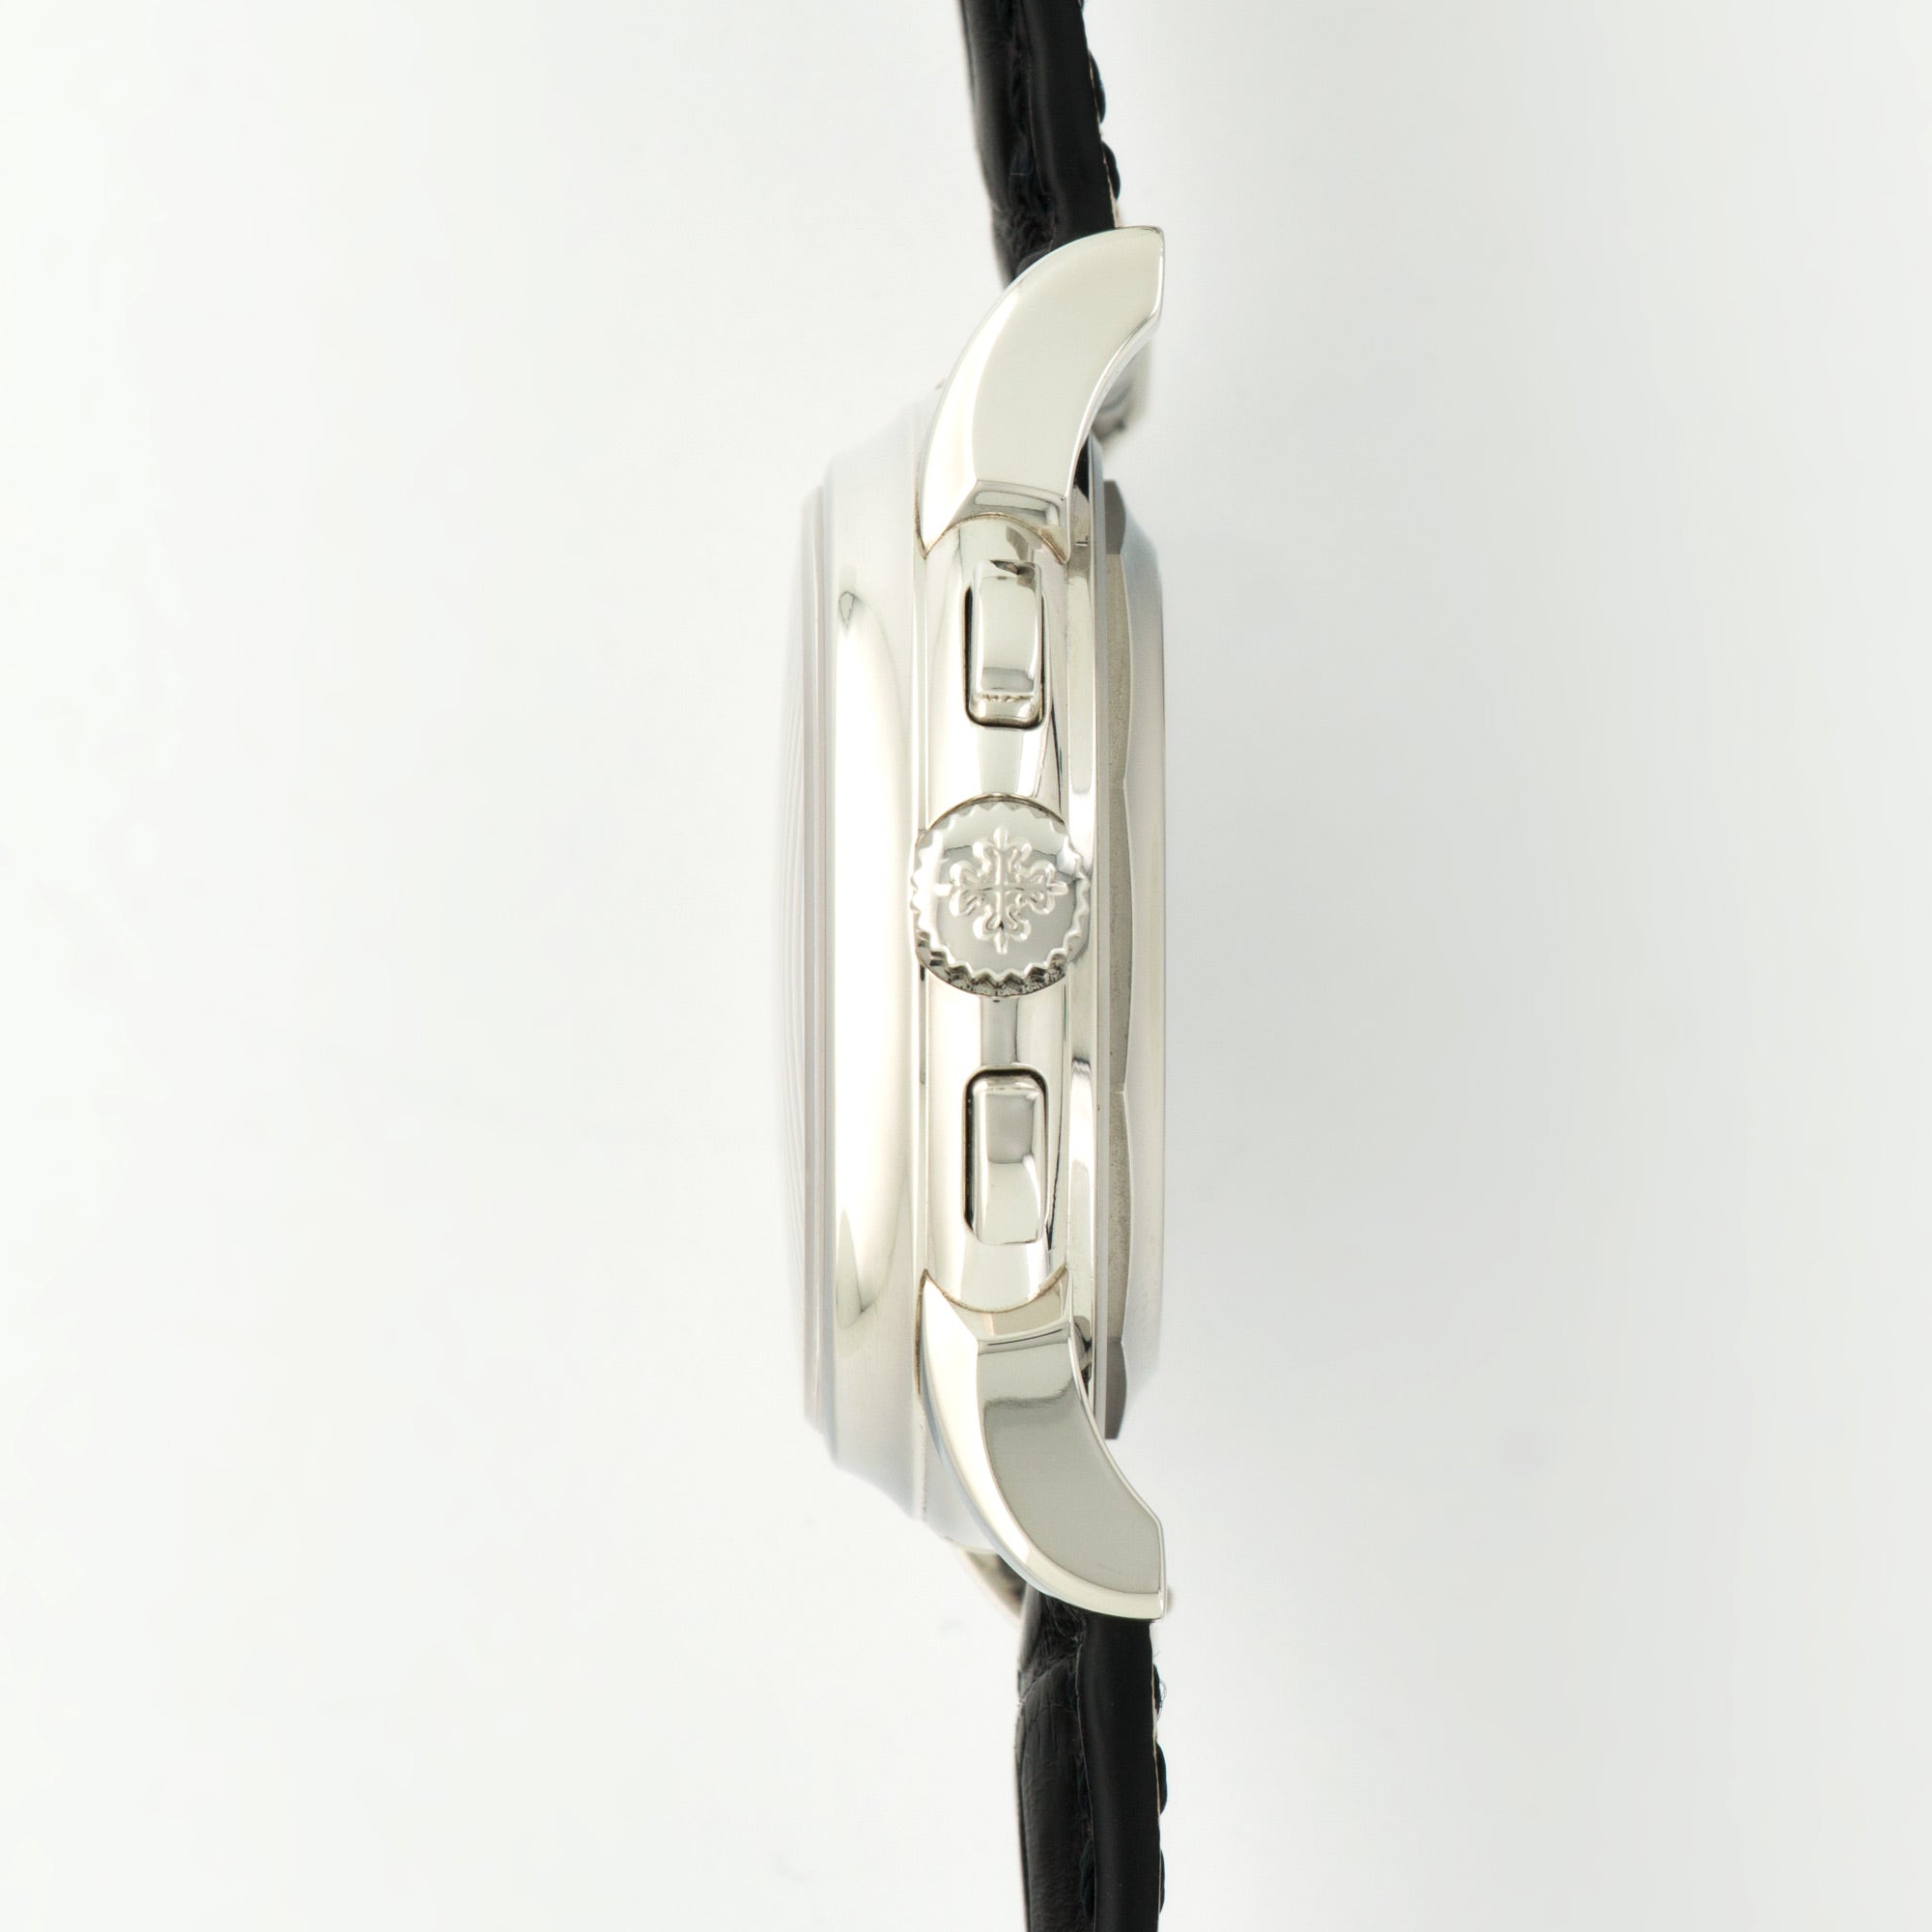 Patek Philippe - Patek Philippe Platinum Perpetual Calendar Chrono Watch Ref. 5970P - The Keystone Watches